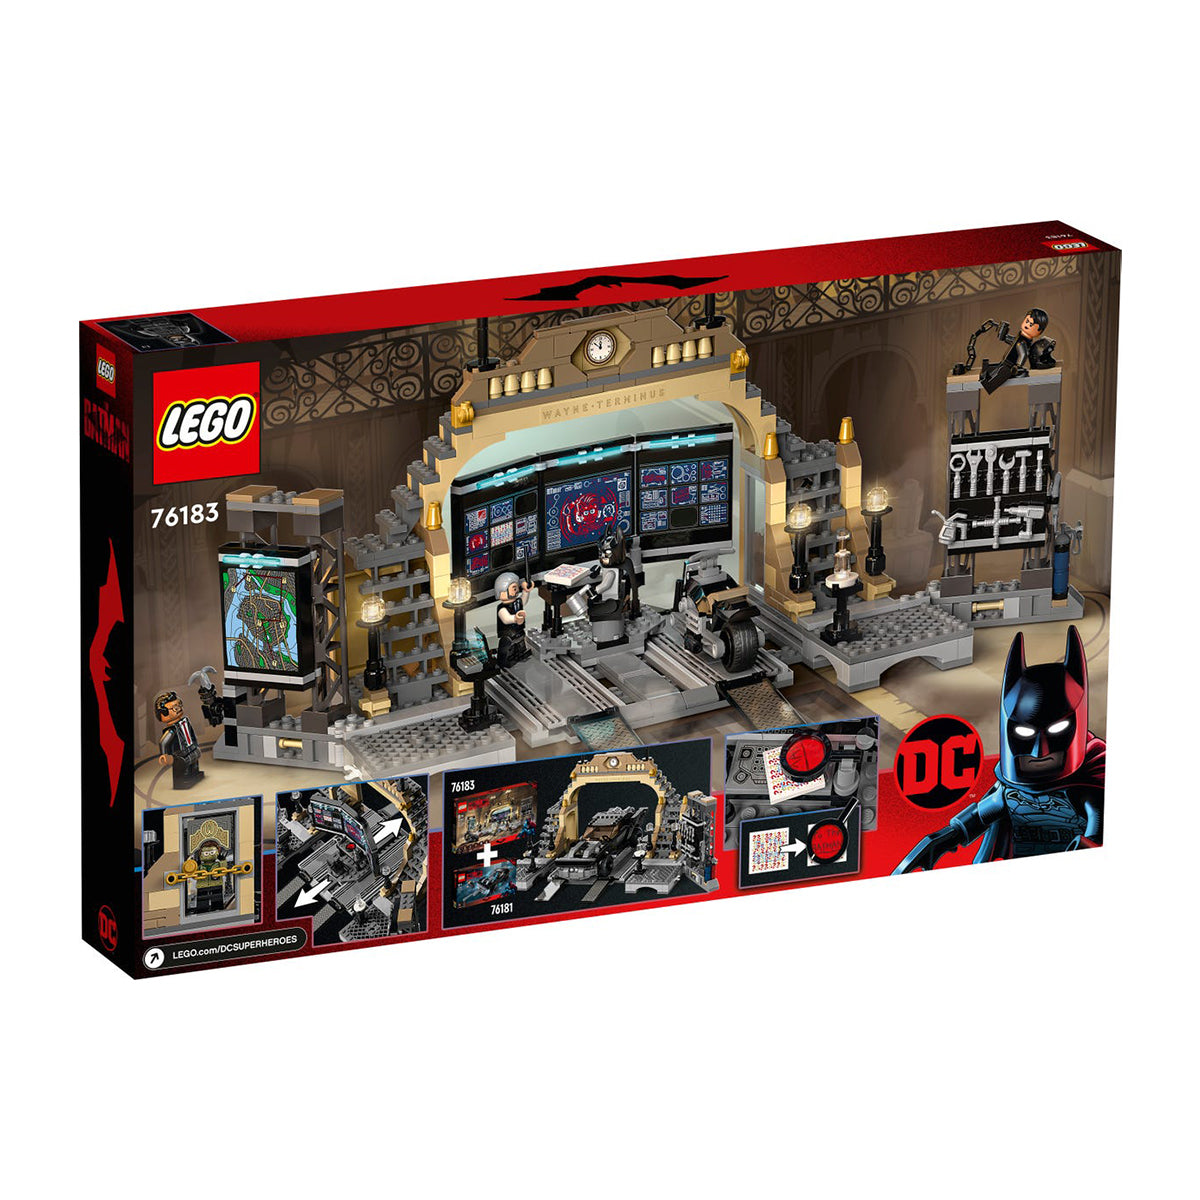 LEGO DC - Batcave: The Riddler Face-off 76183